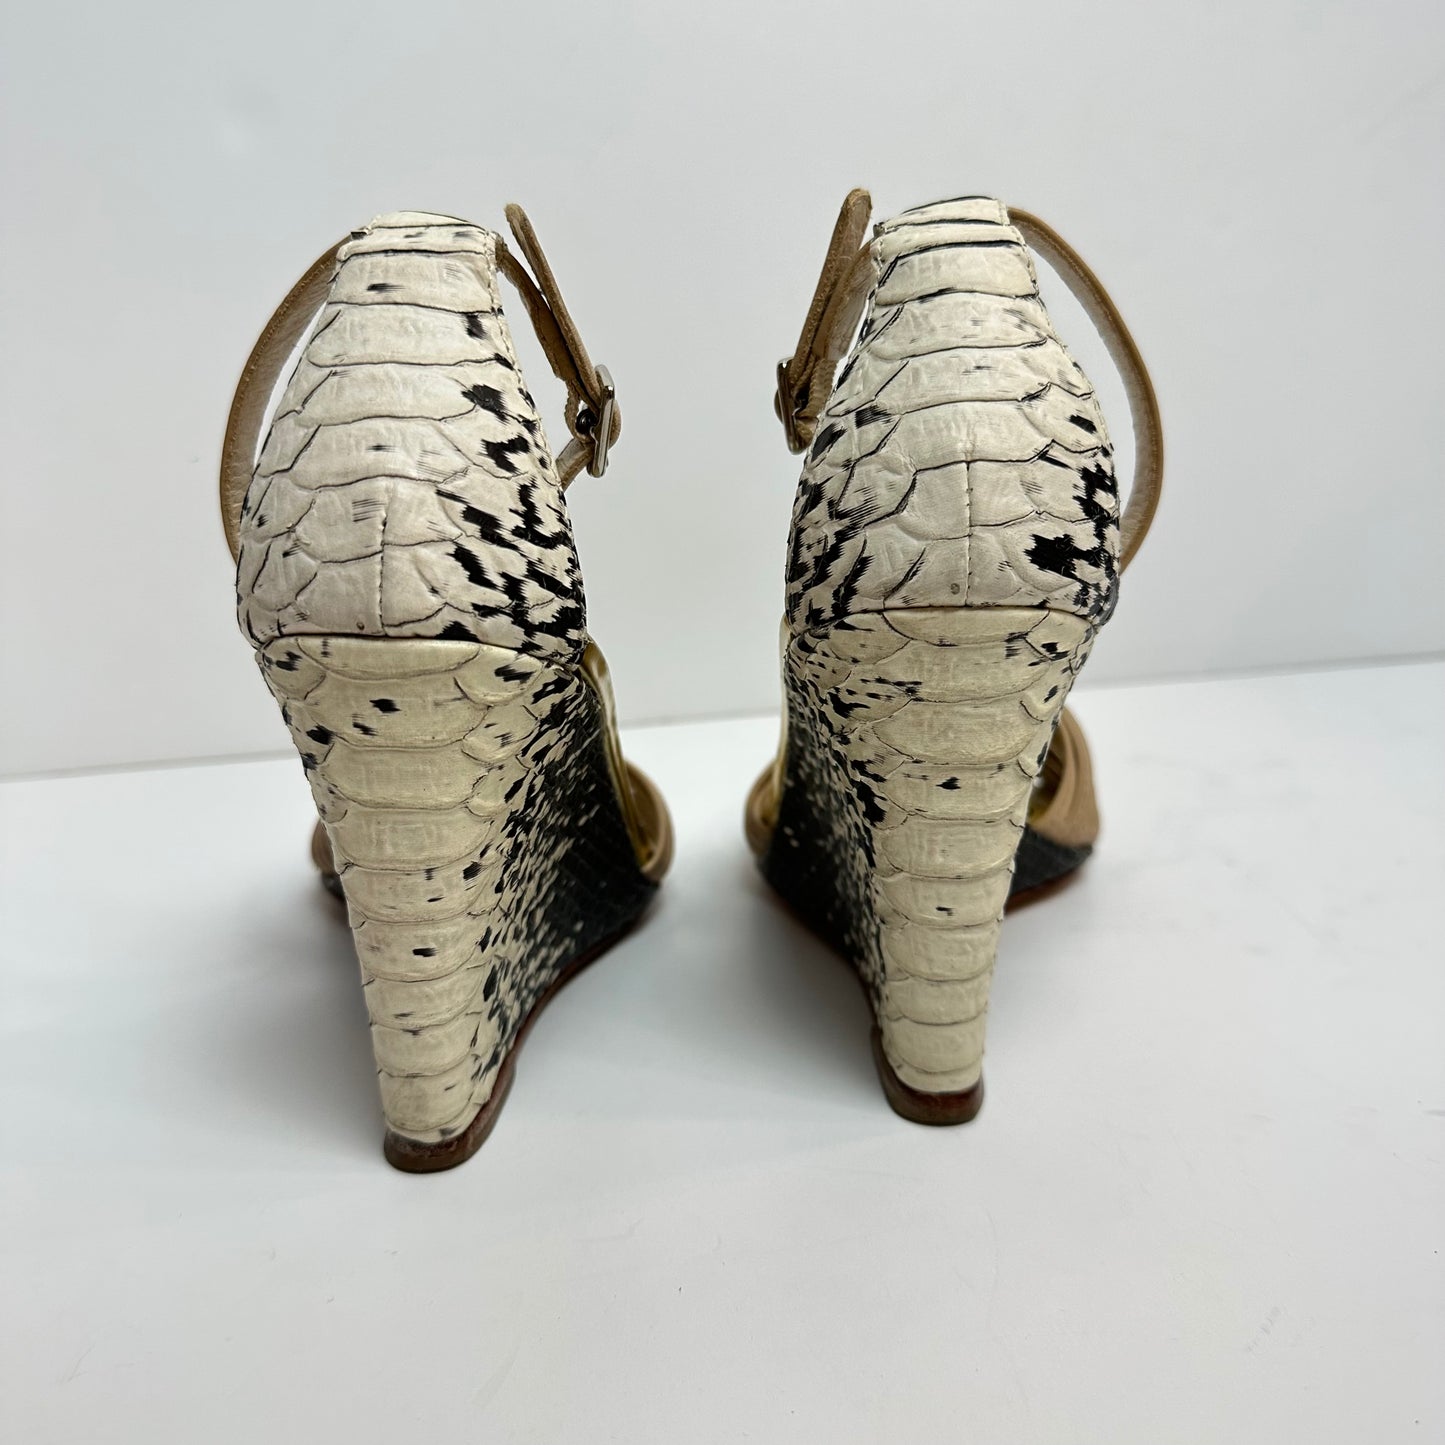 Loeffler Randall Allegra Twist Leather Snake Wedge Sandals Heels Nude Beige 6.5